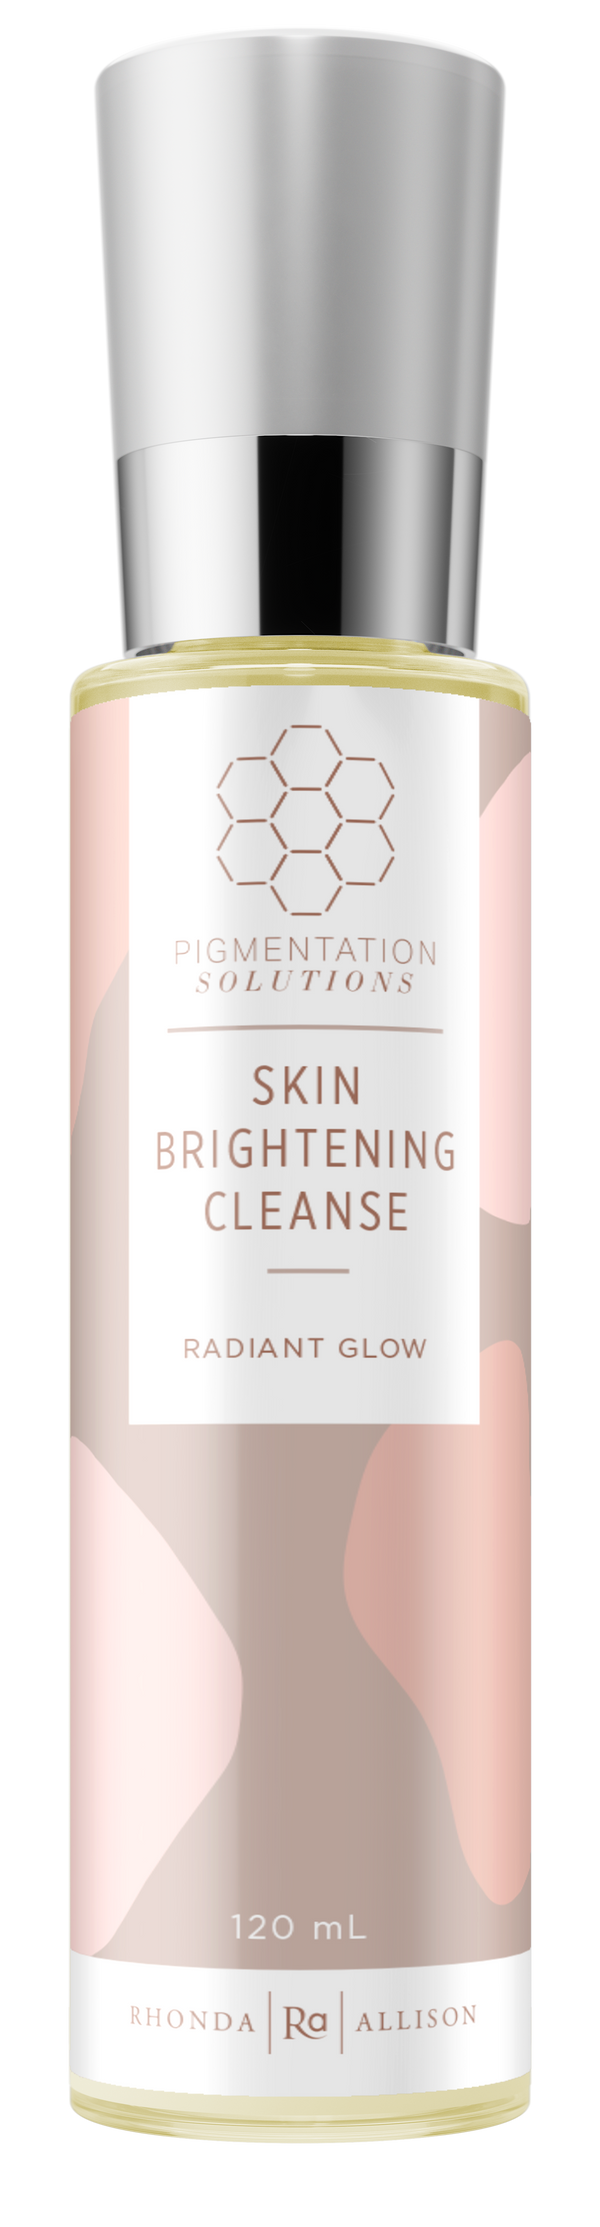 Skin Brightening Cleanse